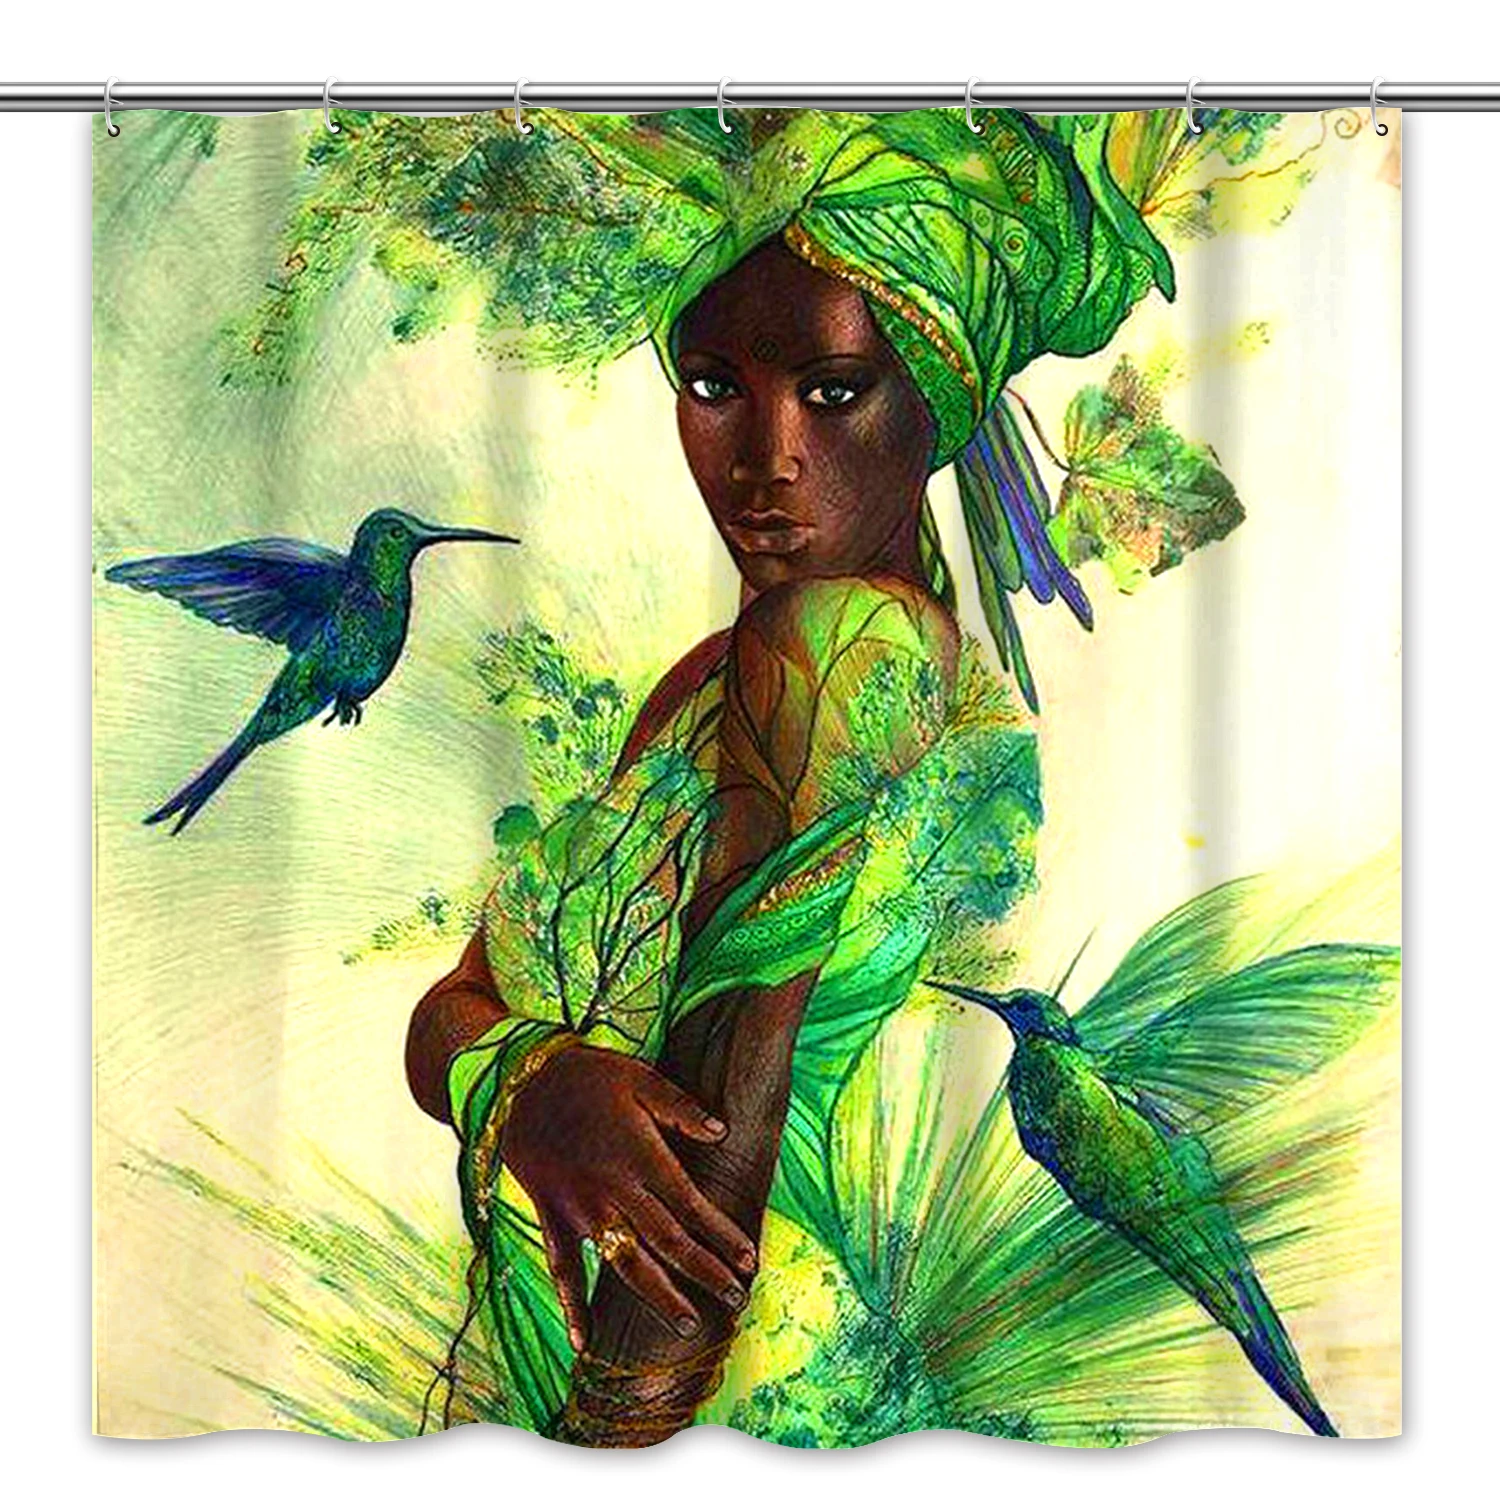 

Black Girl Magic 3D Curtain waterproof African Black Woman Girls digital polyester afro girl shower curtain bathroom curtain